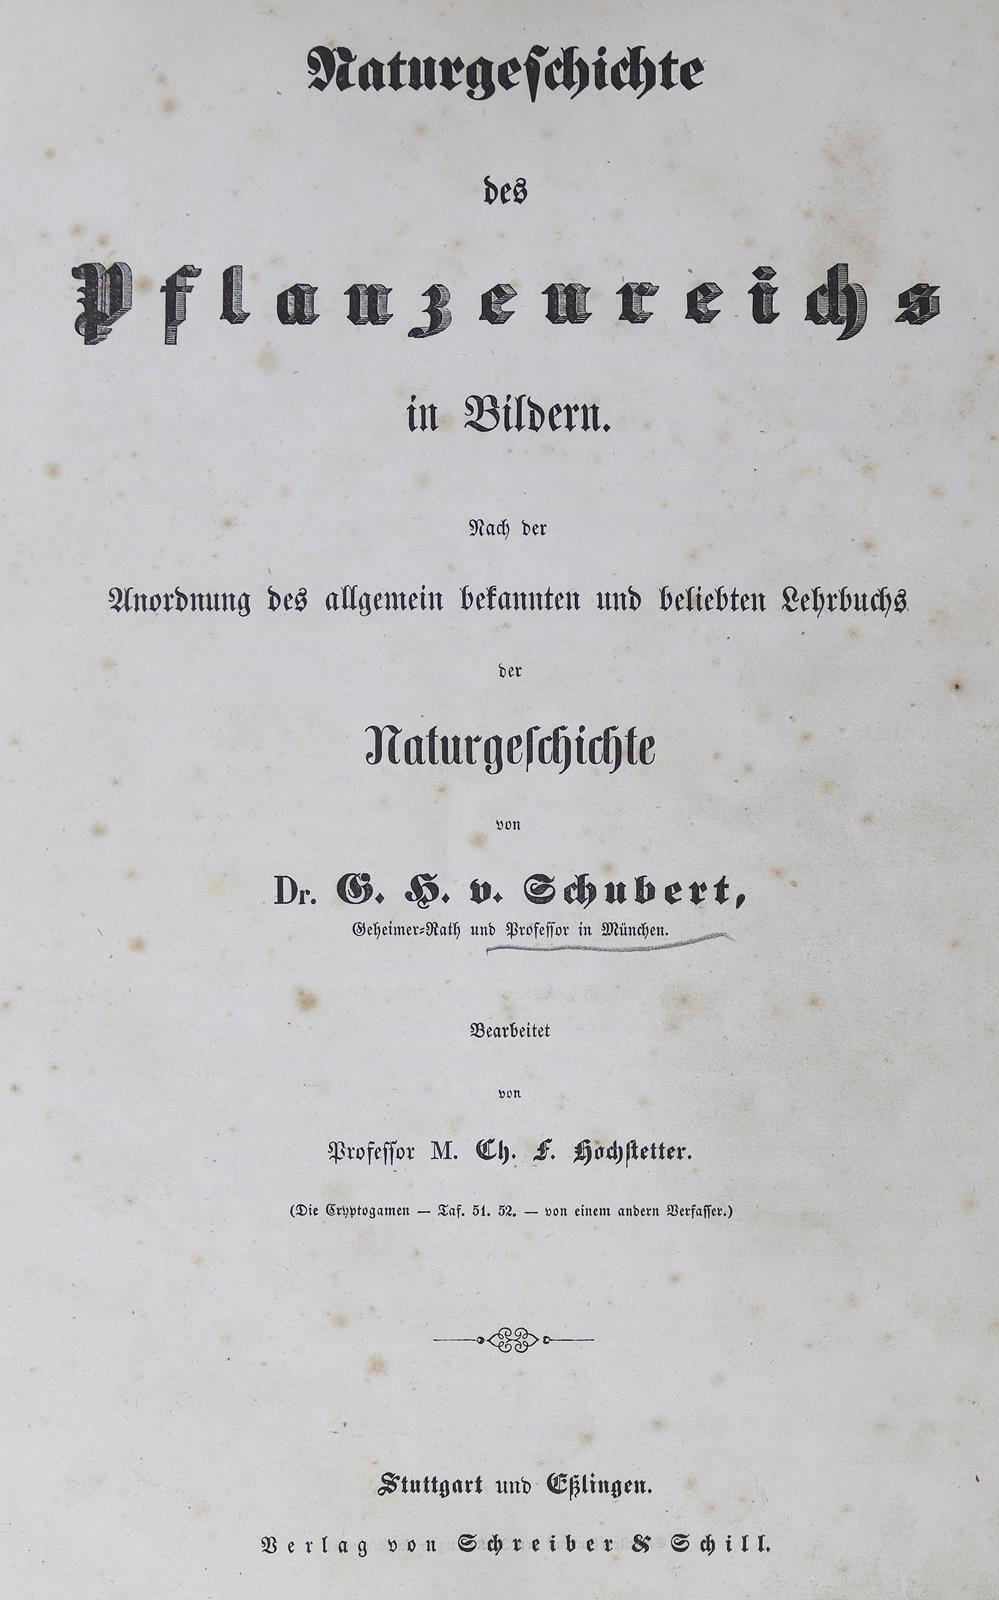 Schubert,H.H.v. u. C.F.Hochstetter. | Bild Nr.1